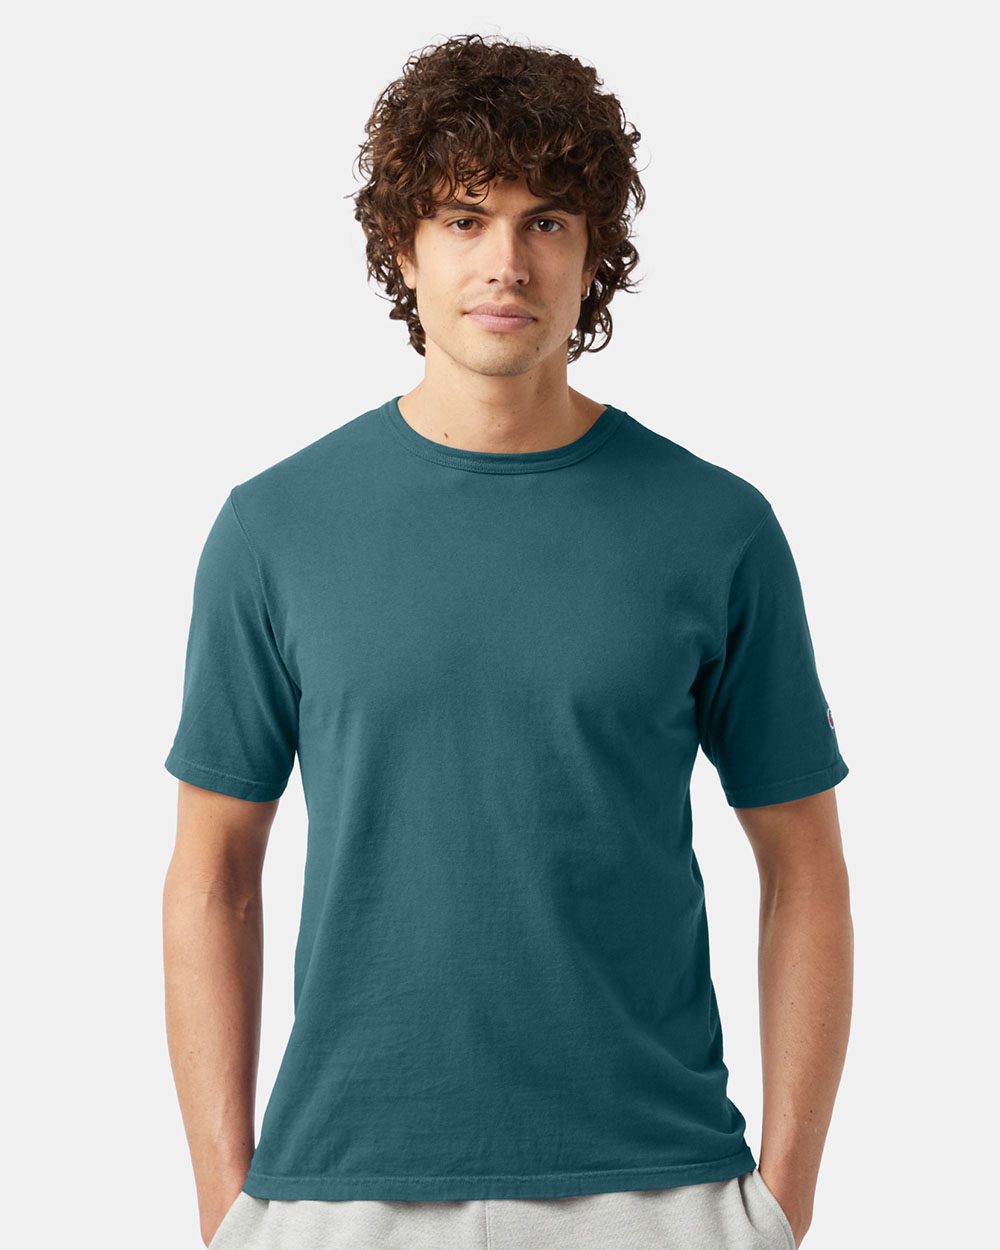 Sizes S-3XL Garment Dyed Logo Short Sleeve T-Shirt Tee Shirt Champion 